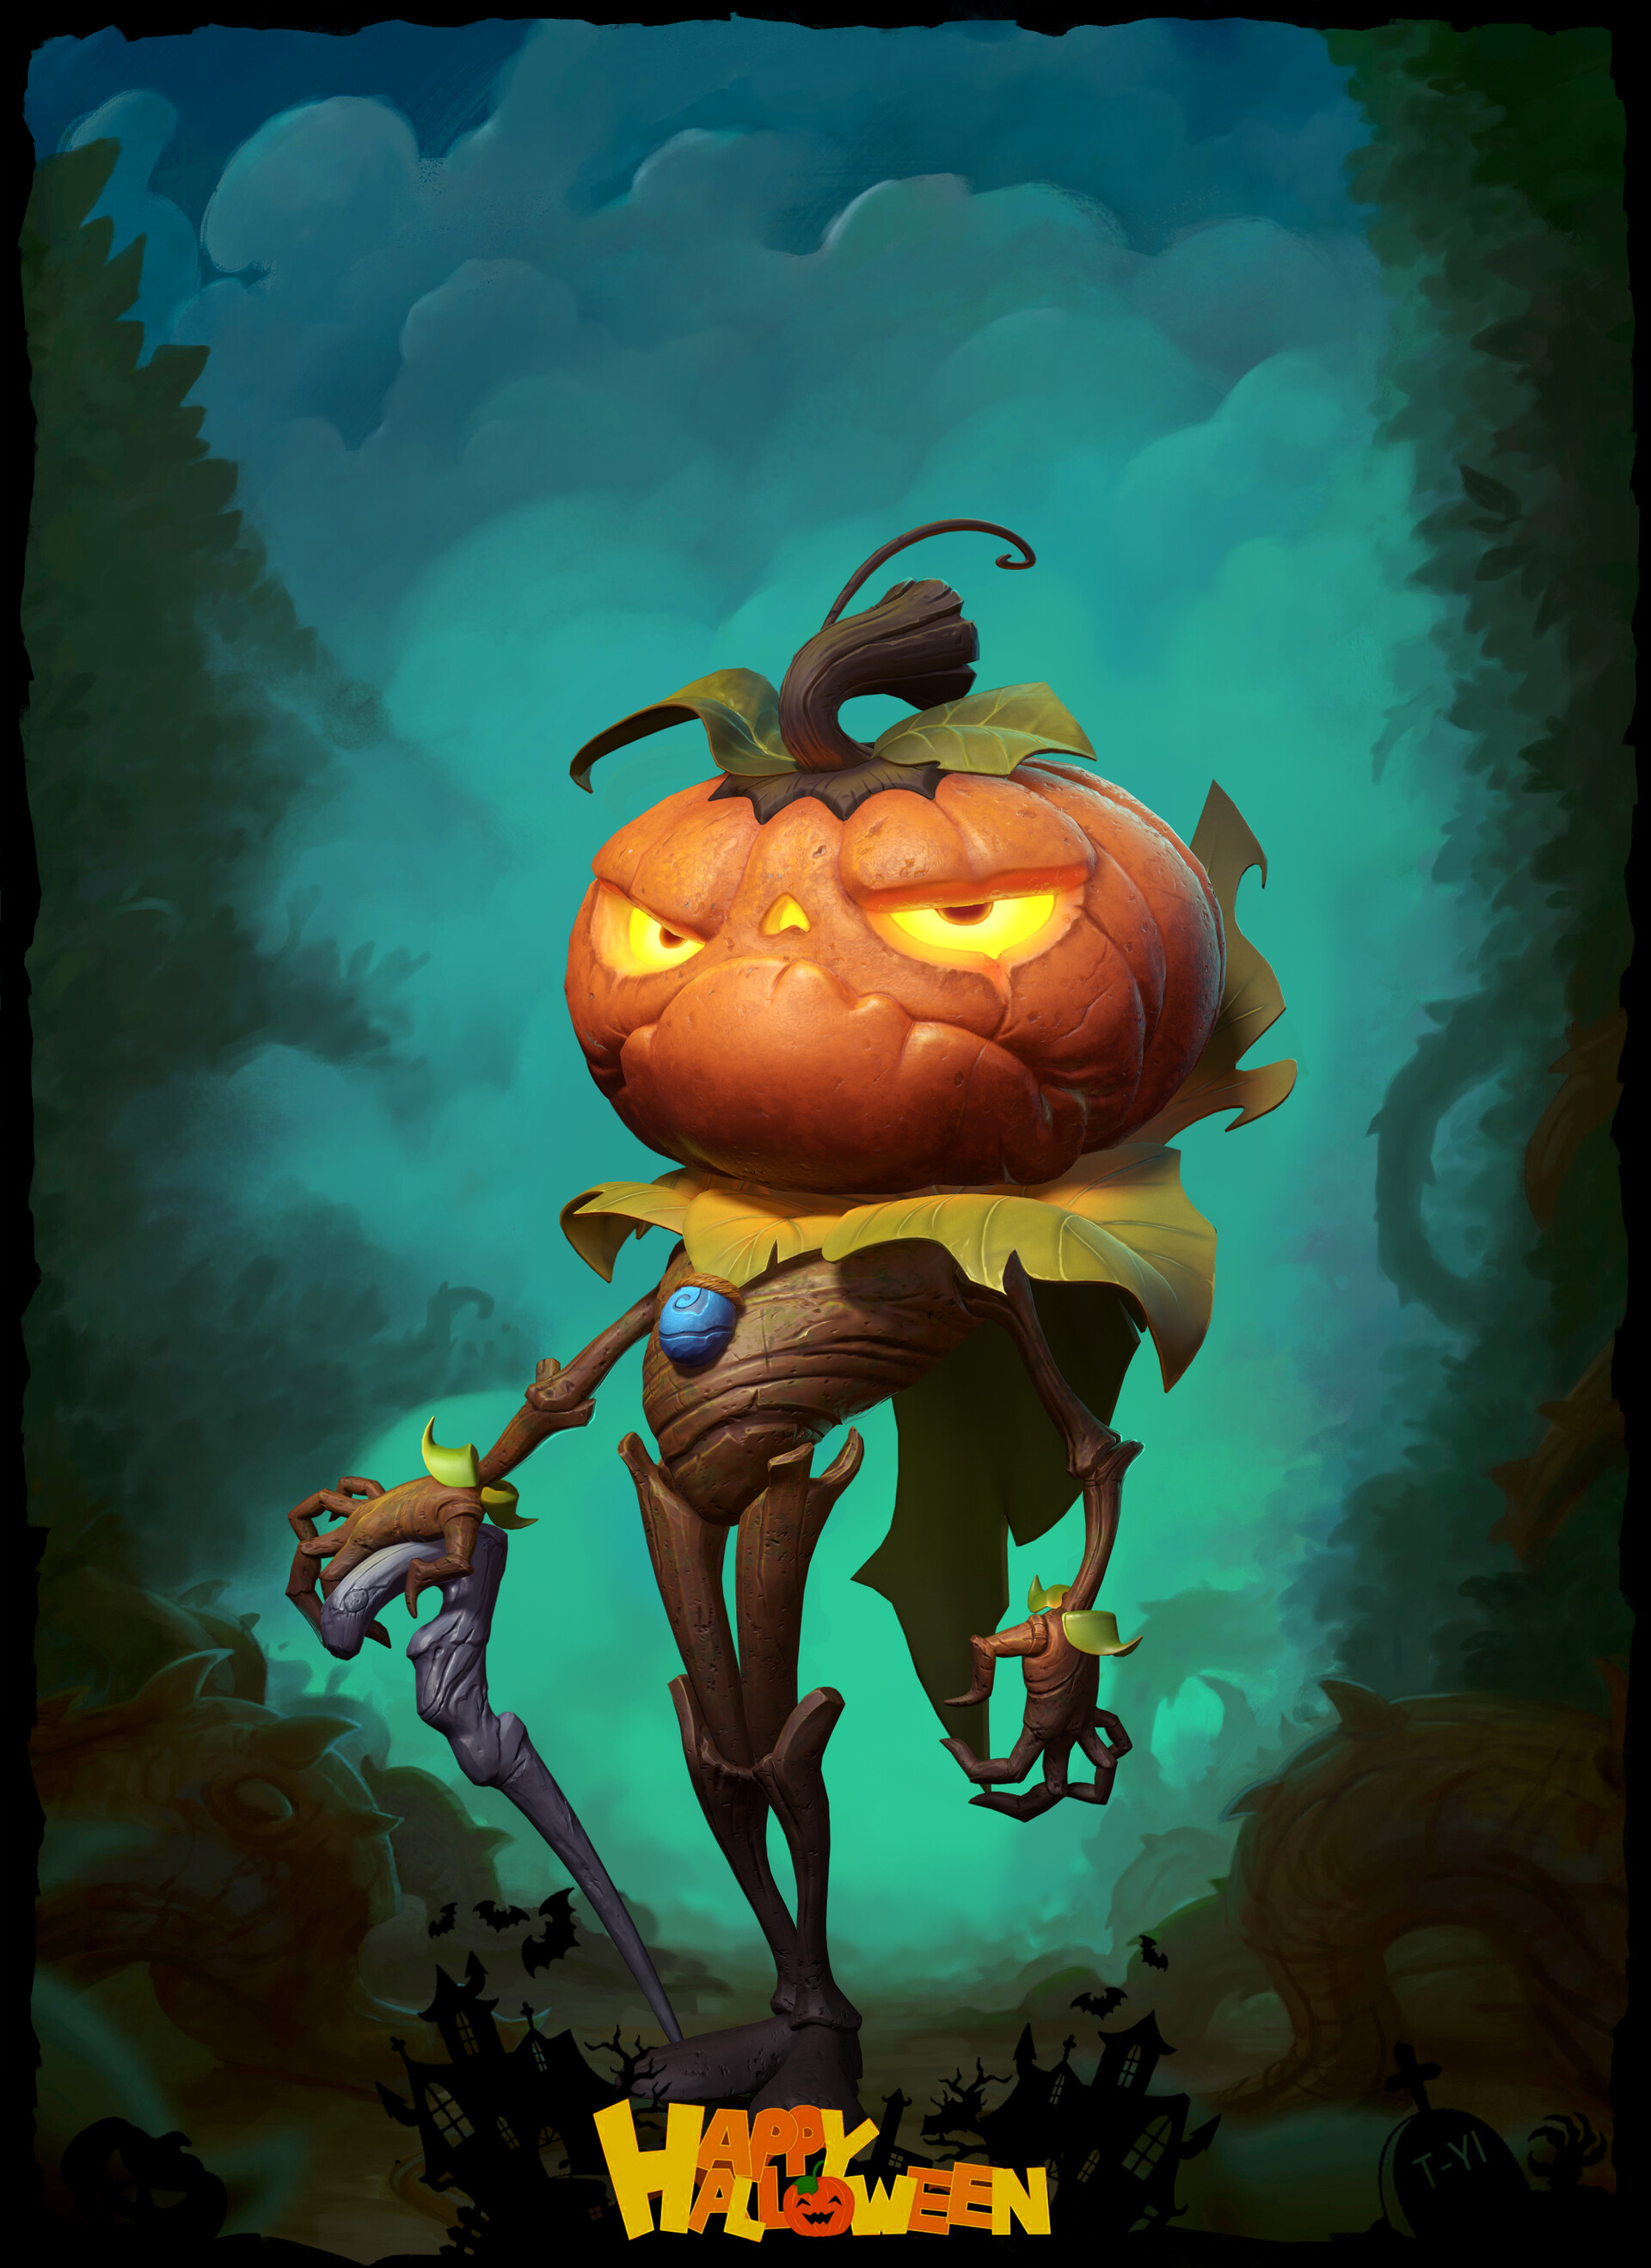 ArtStation - Halloween pumpkin head